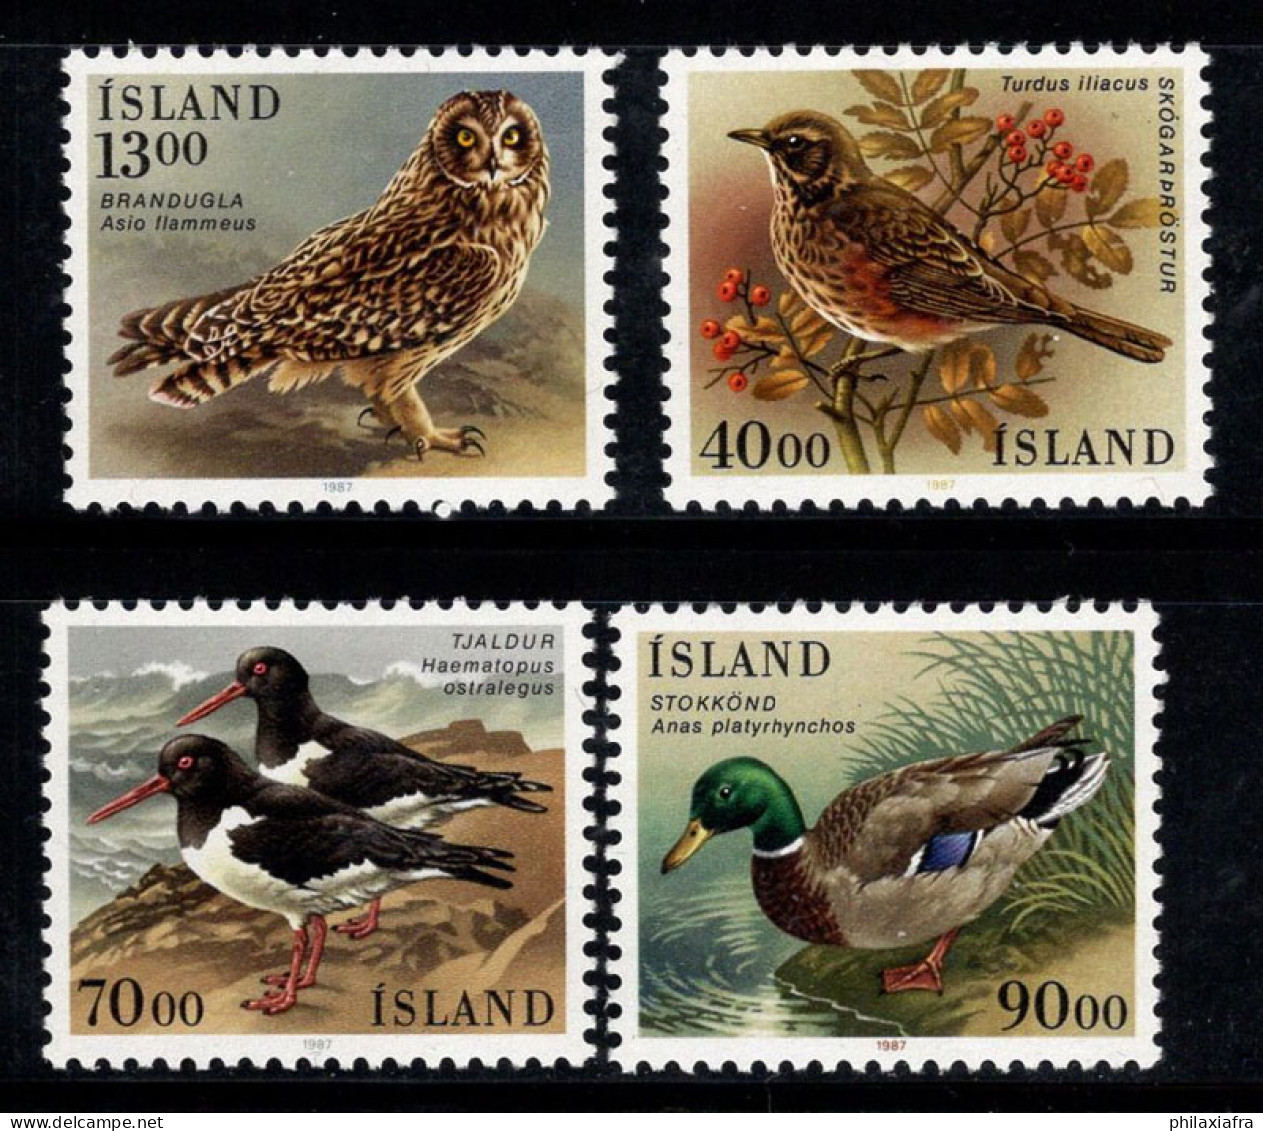 Islande 1987 Mi. 668-671 Neuf ** 100% Oiseaux, Faune - Nuovi